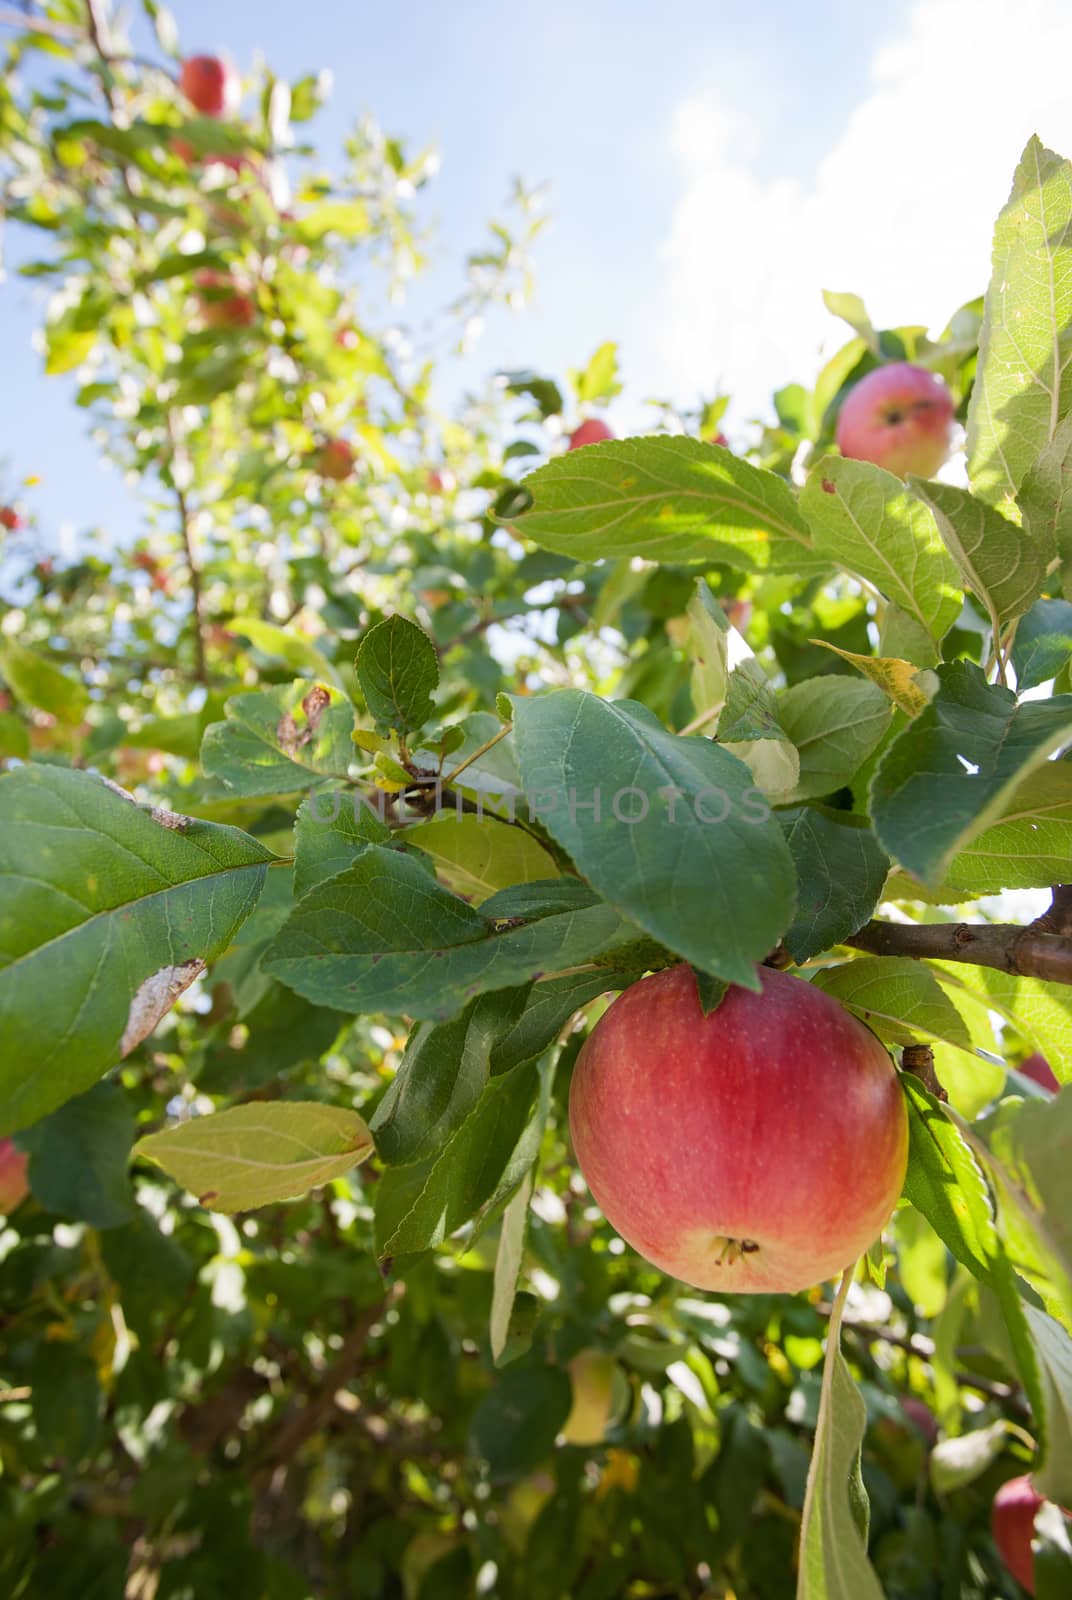 Ripe apples hanging on an aple tree